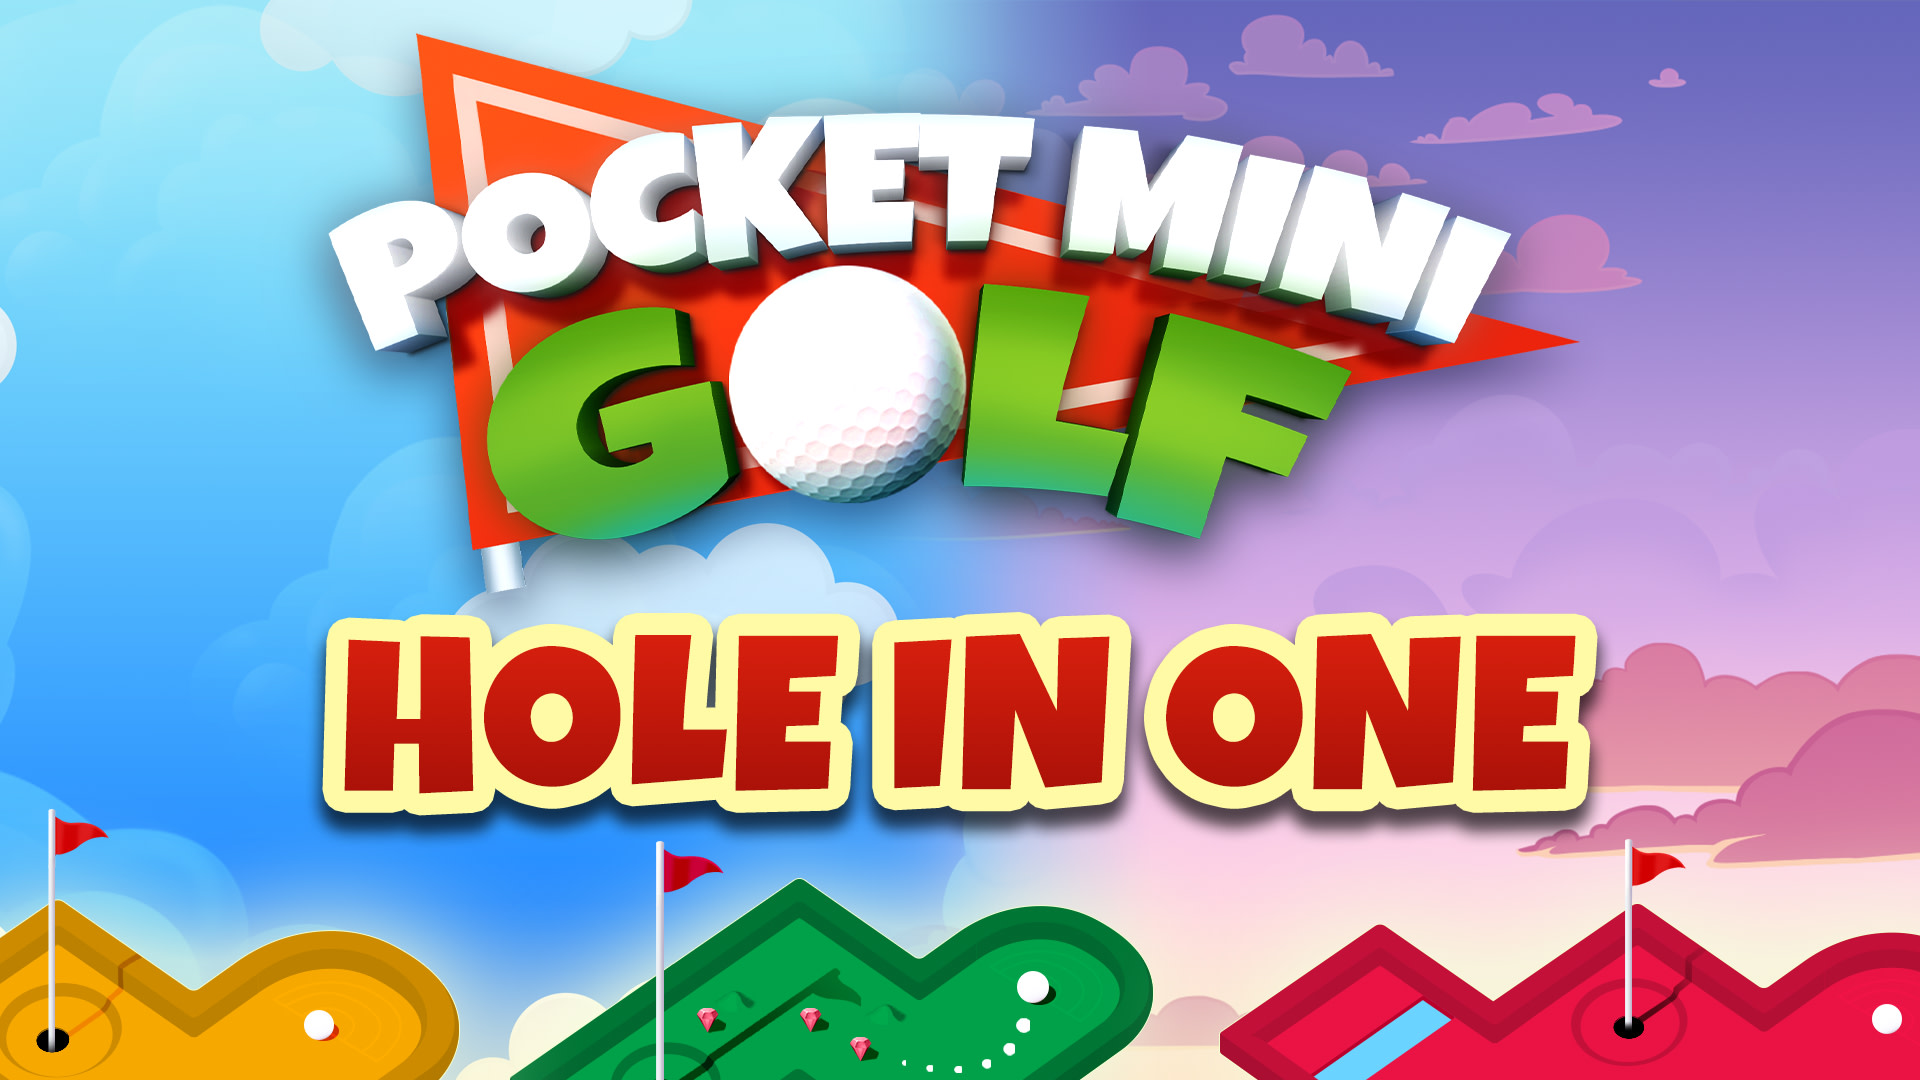 Pocket Mini Golf: Hole in one